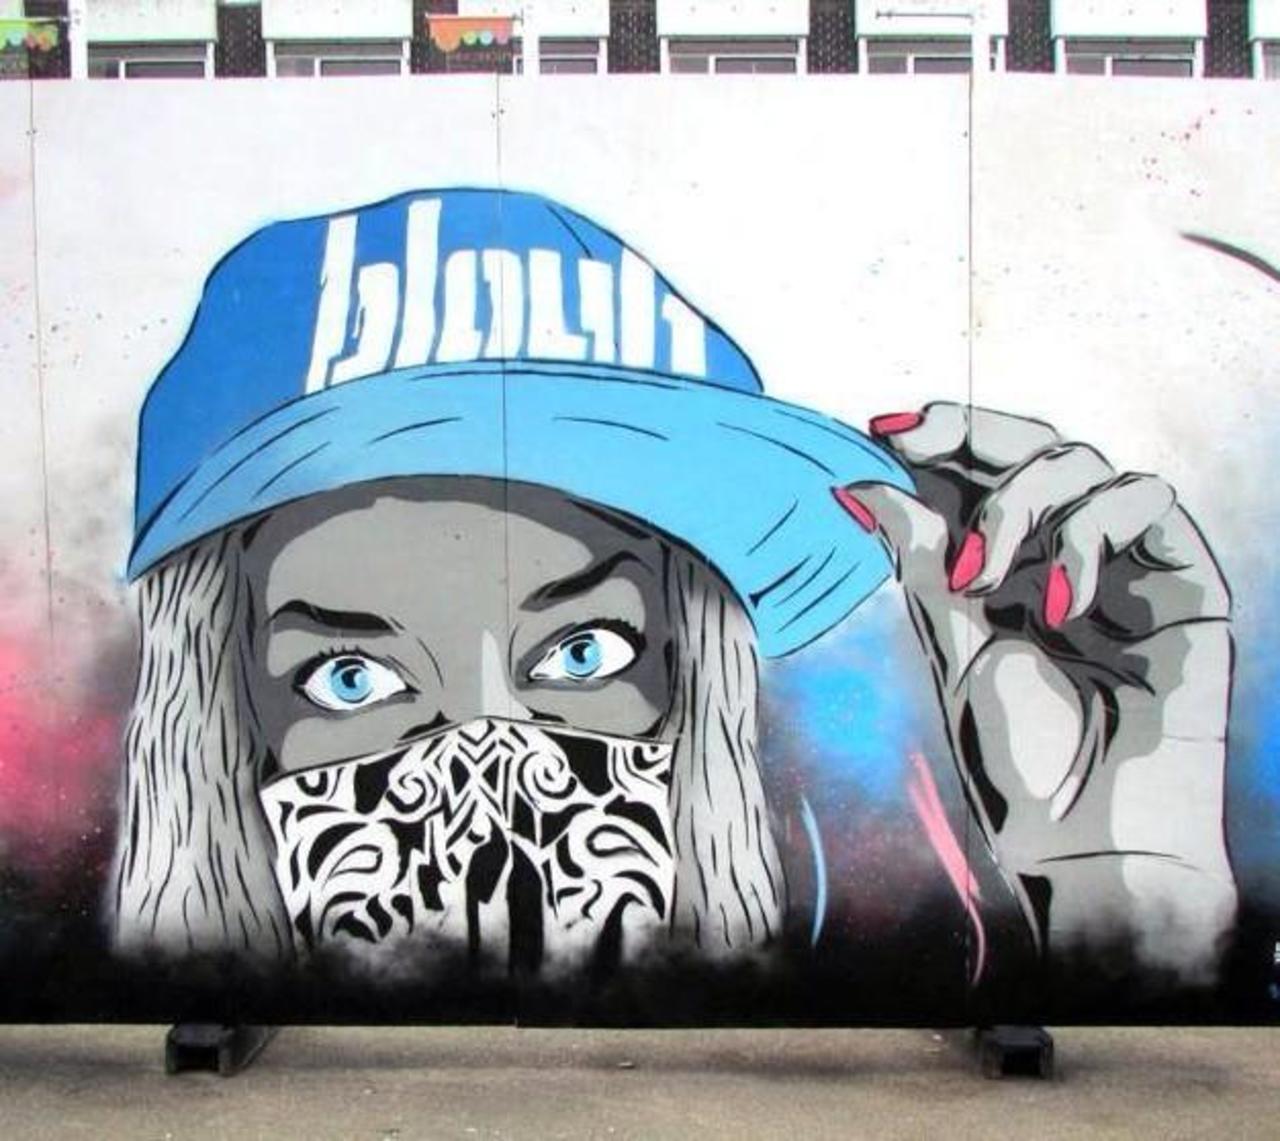 Artist Blouh at the Glouchester Paint Jamb, London, UK #art #mural #graffiti #streetart http://t.co/4G7YVnf0TW